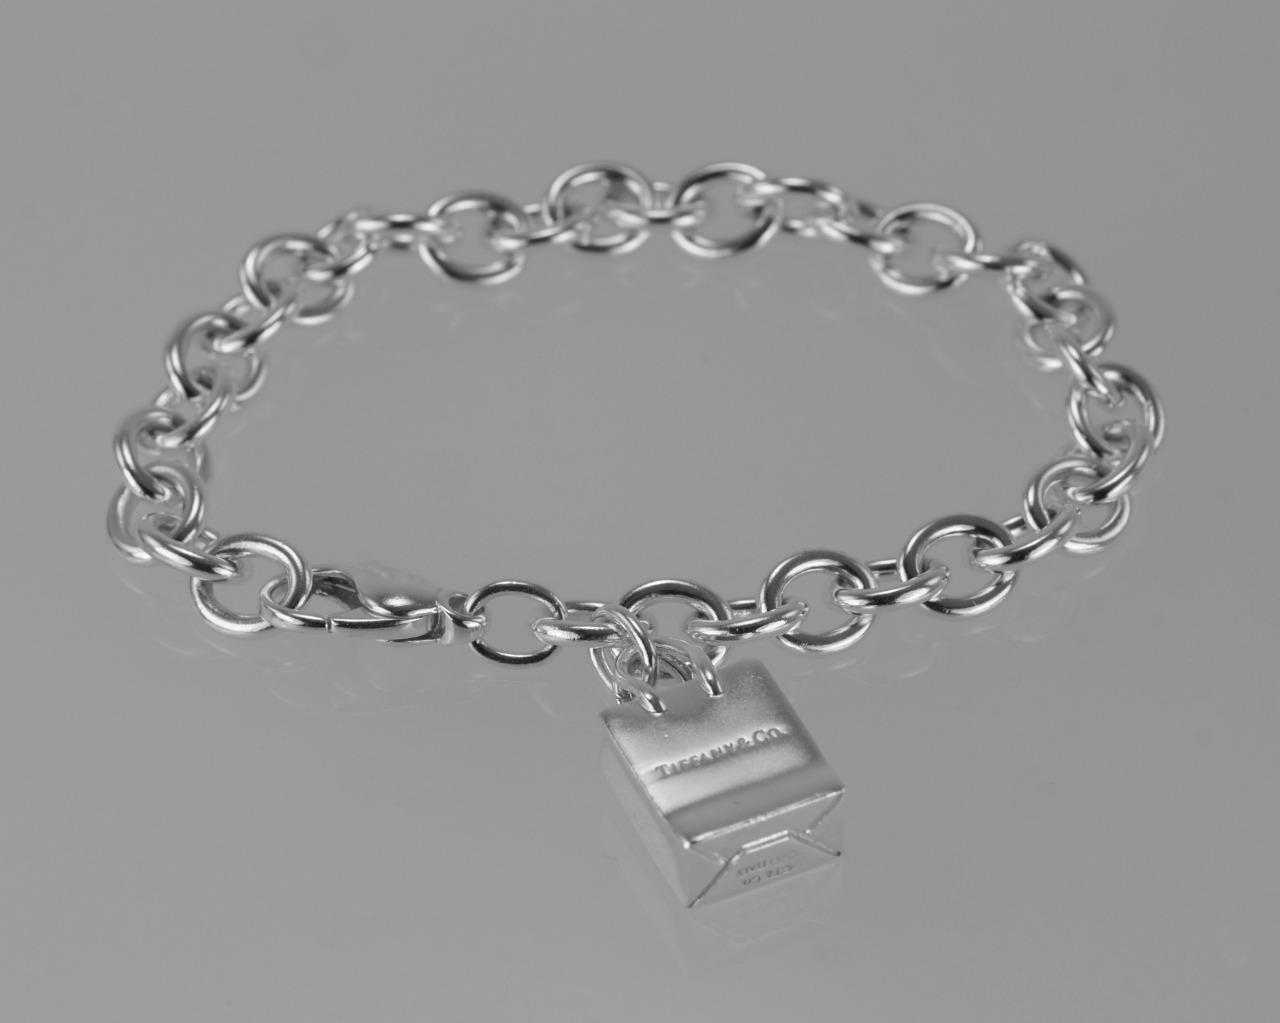 Tiffany & Co Silver Shopping Bag Charm Bracelet Bangle Link 